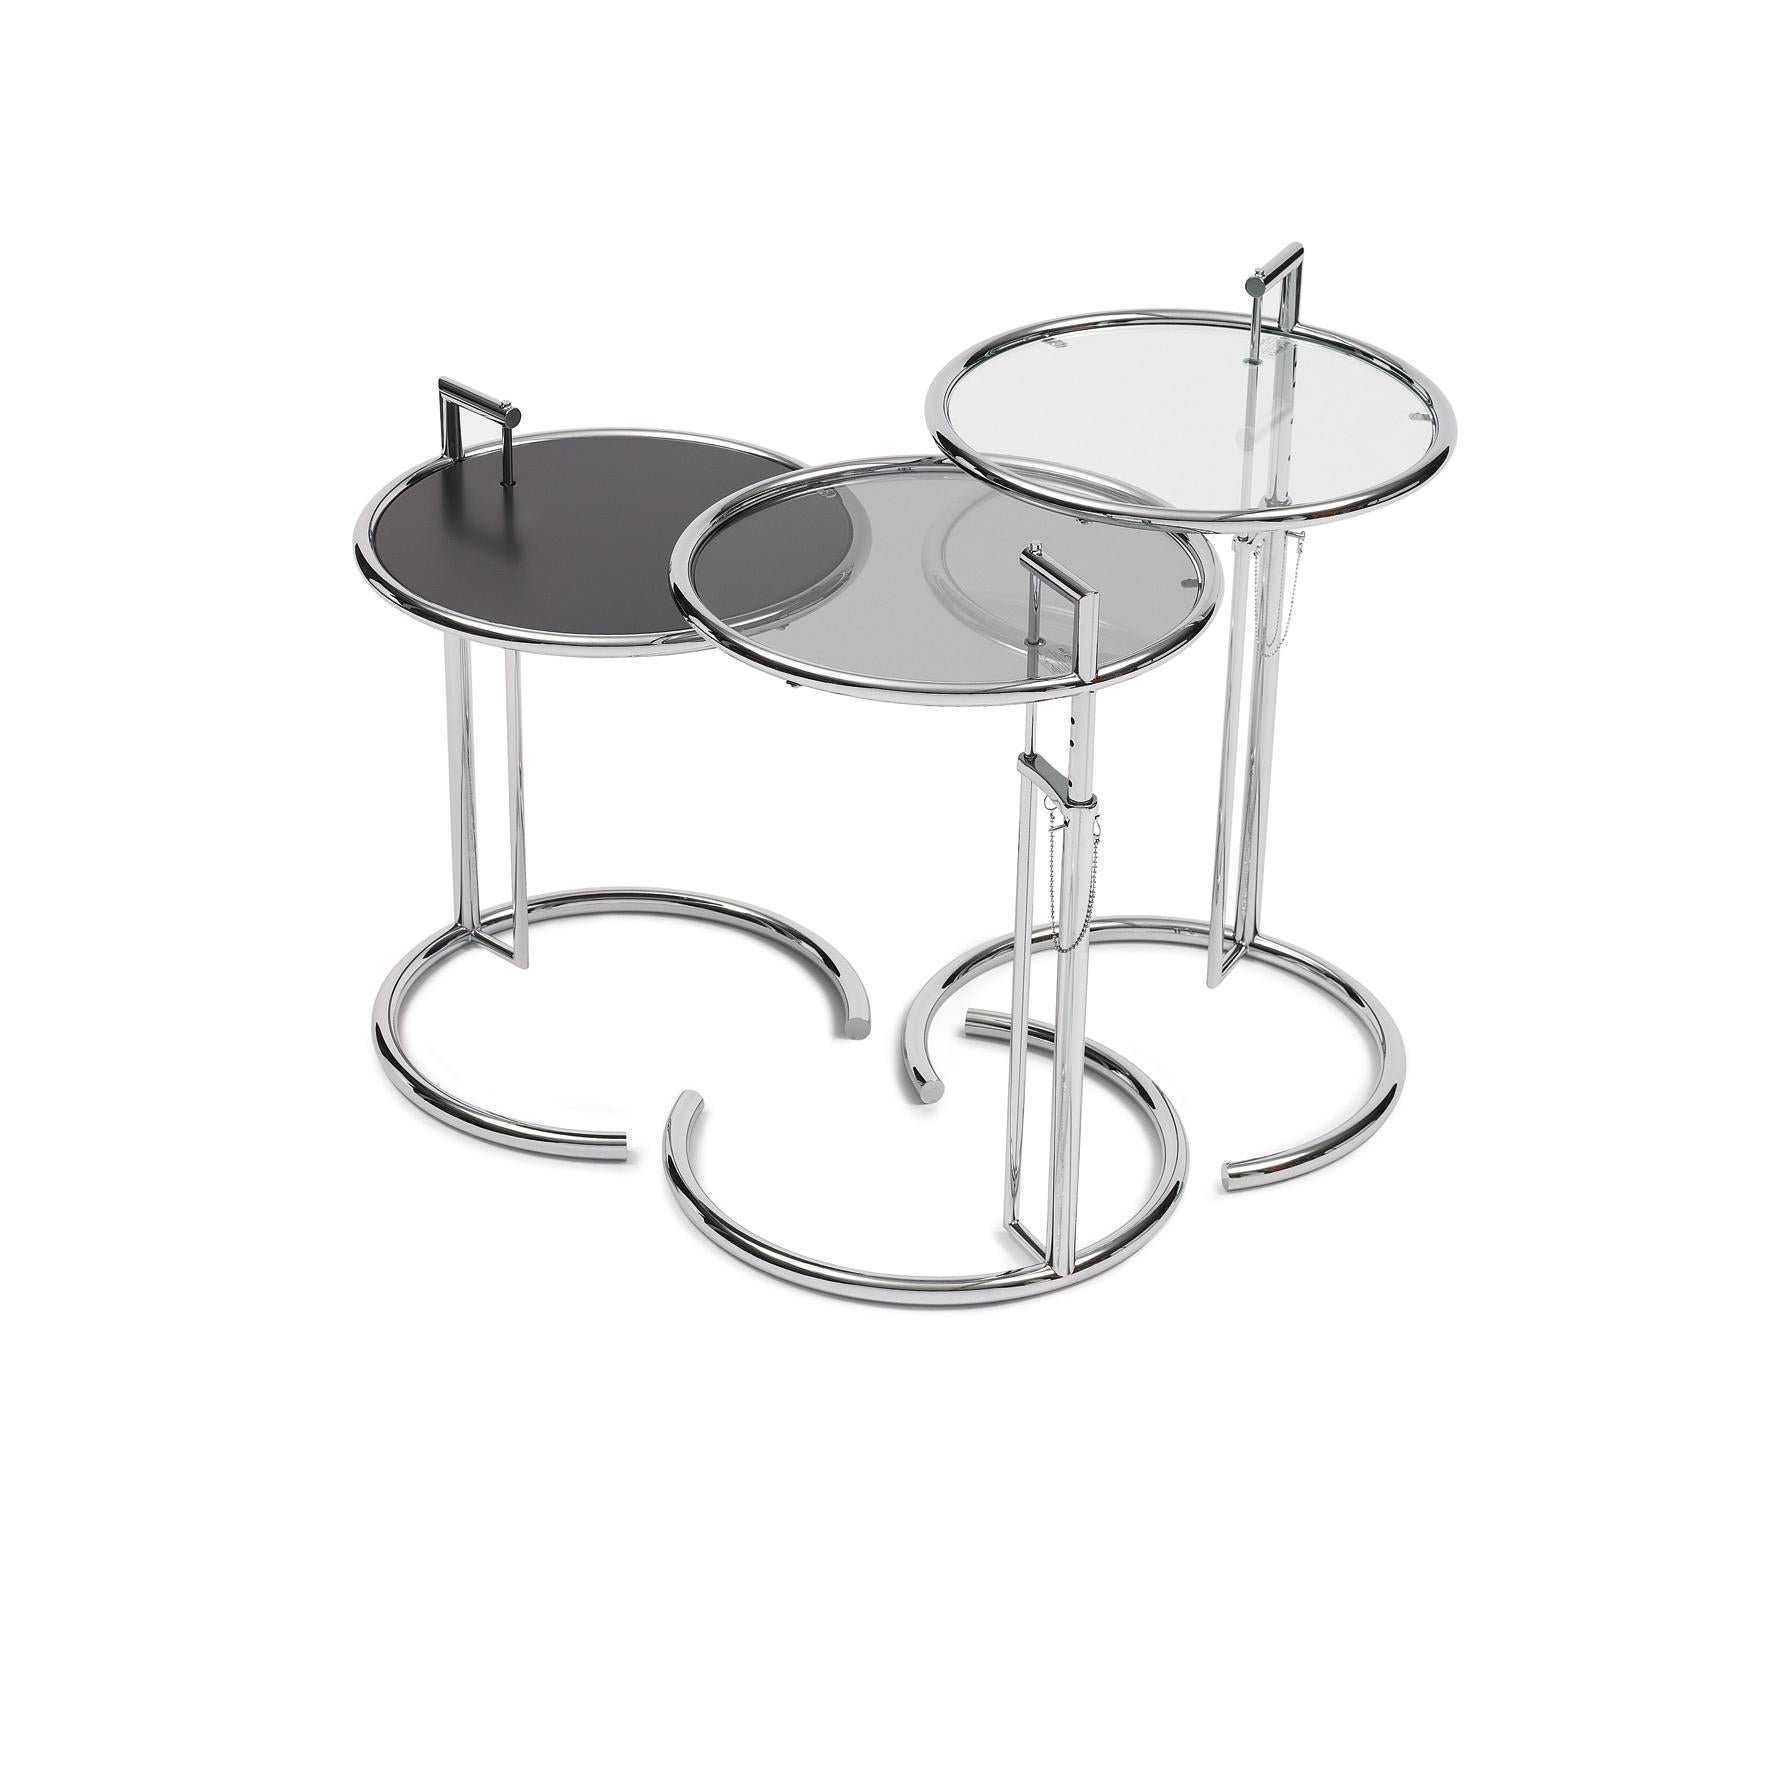 eileen gray adjustable table